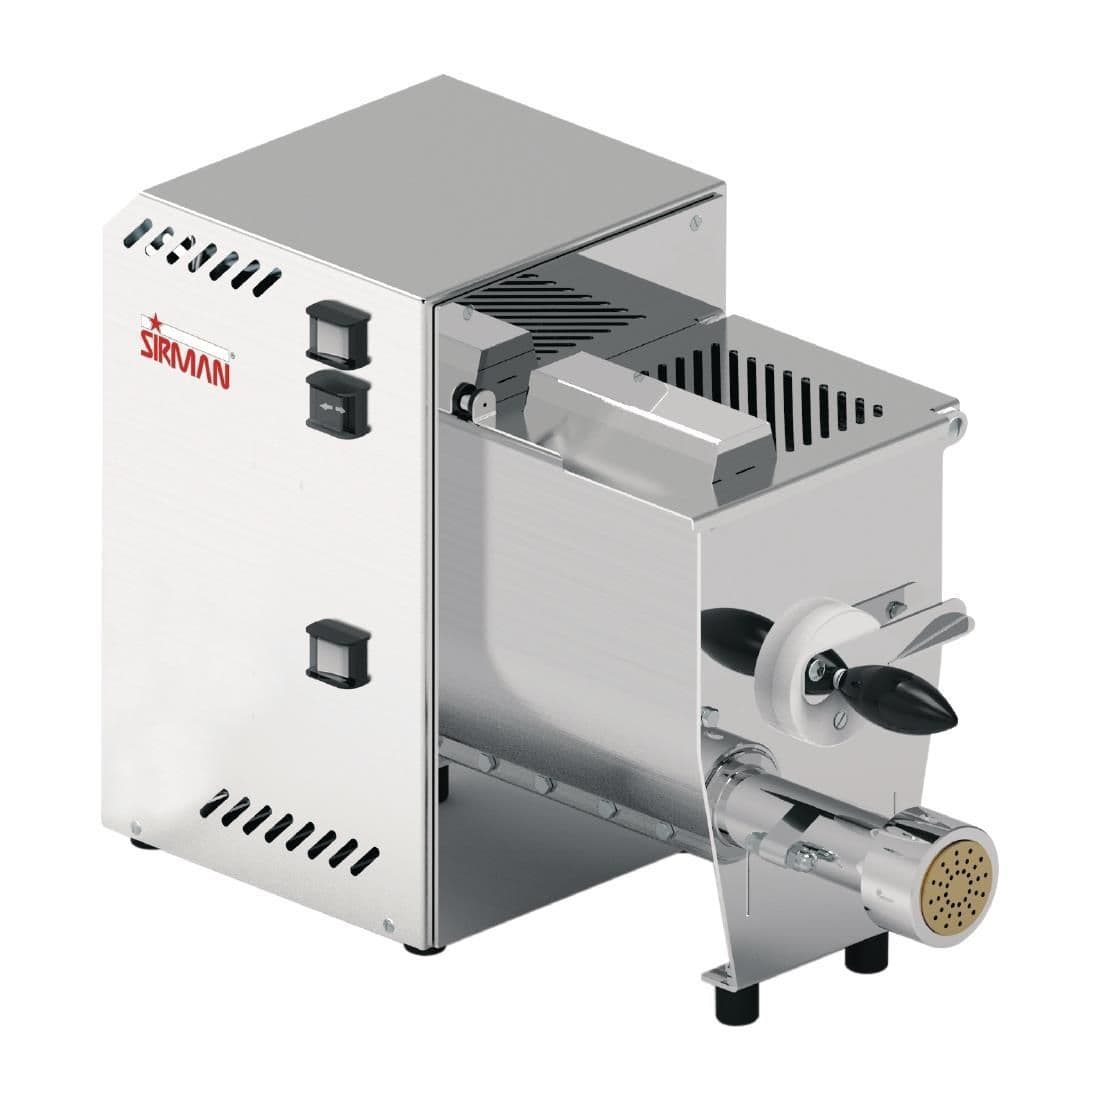 DM688-FUS Sirman Sinfonia 2 Pasta Machine with Fusilli 8.4mm Die JD Catering Equipment Solutions Ltd